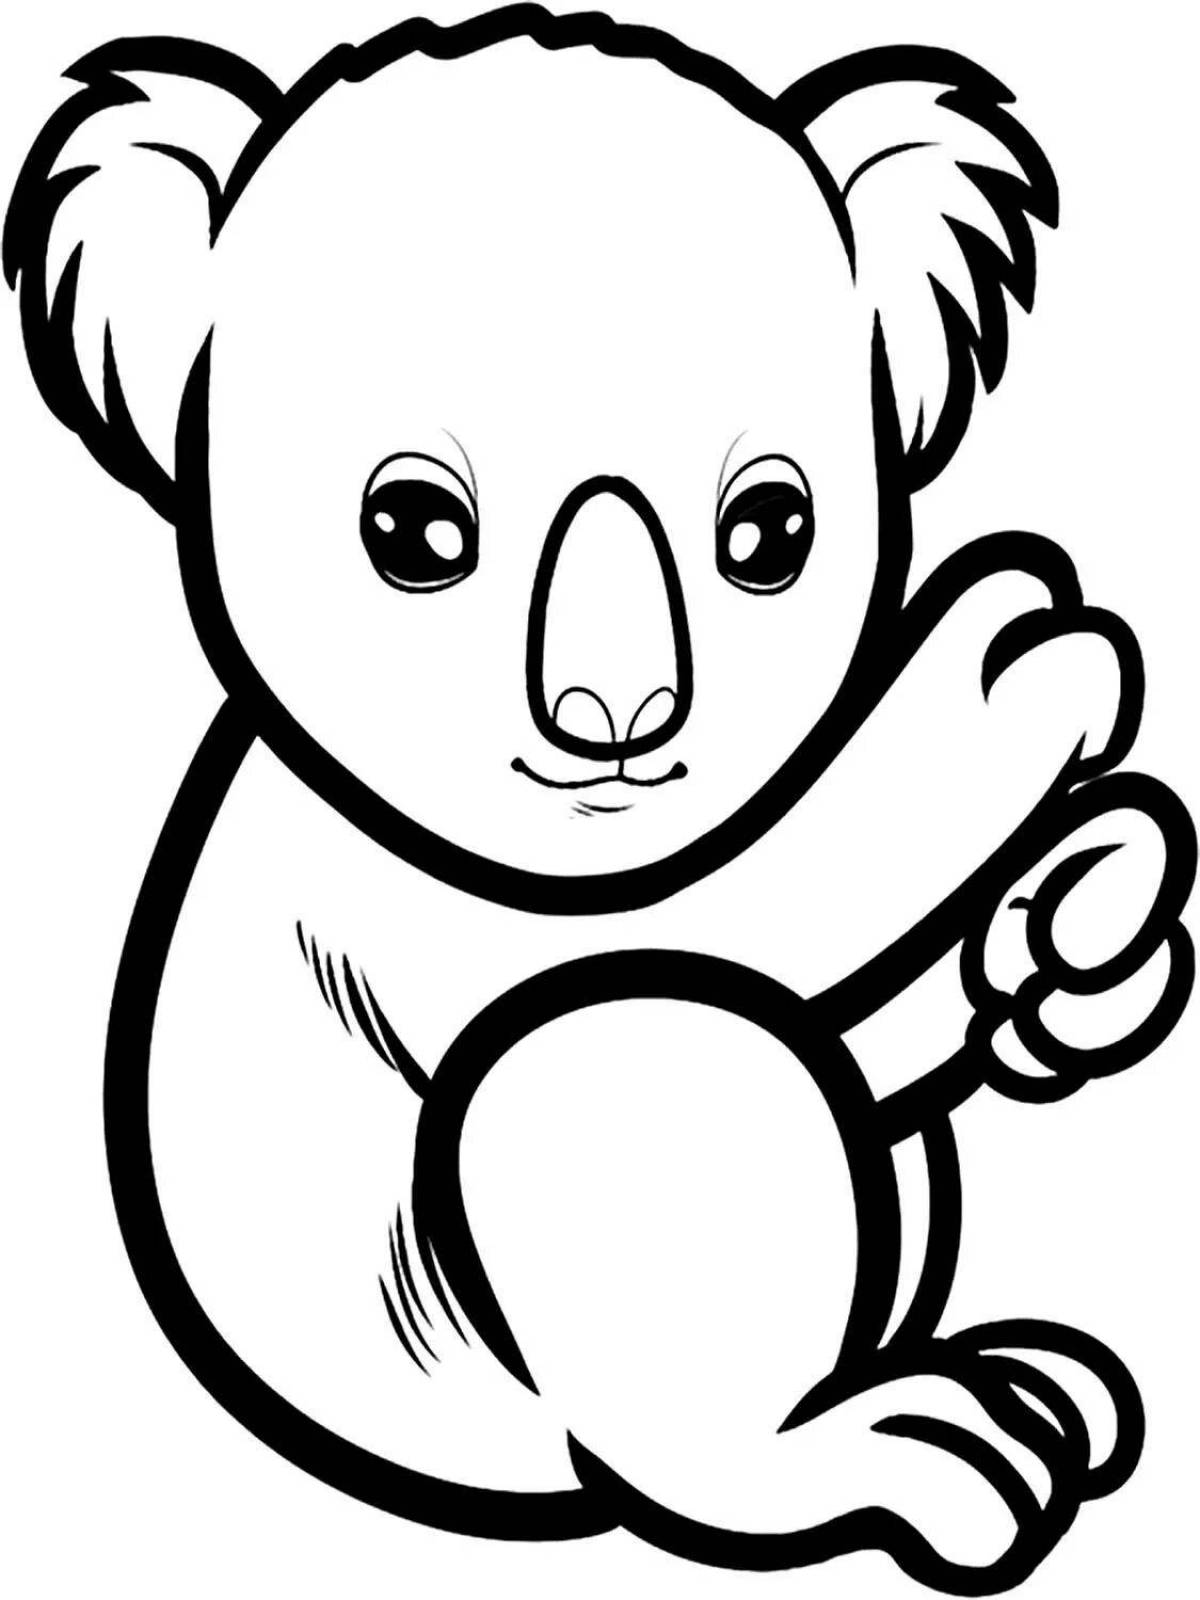 Детская коала. Коала. Раскраска. Коала раскраска для детей. Раскраска животных для малышей. Раскраски малыш коала.